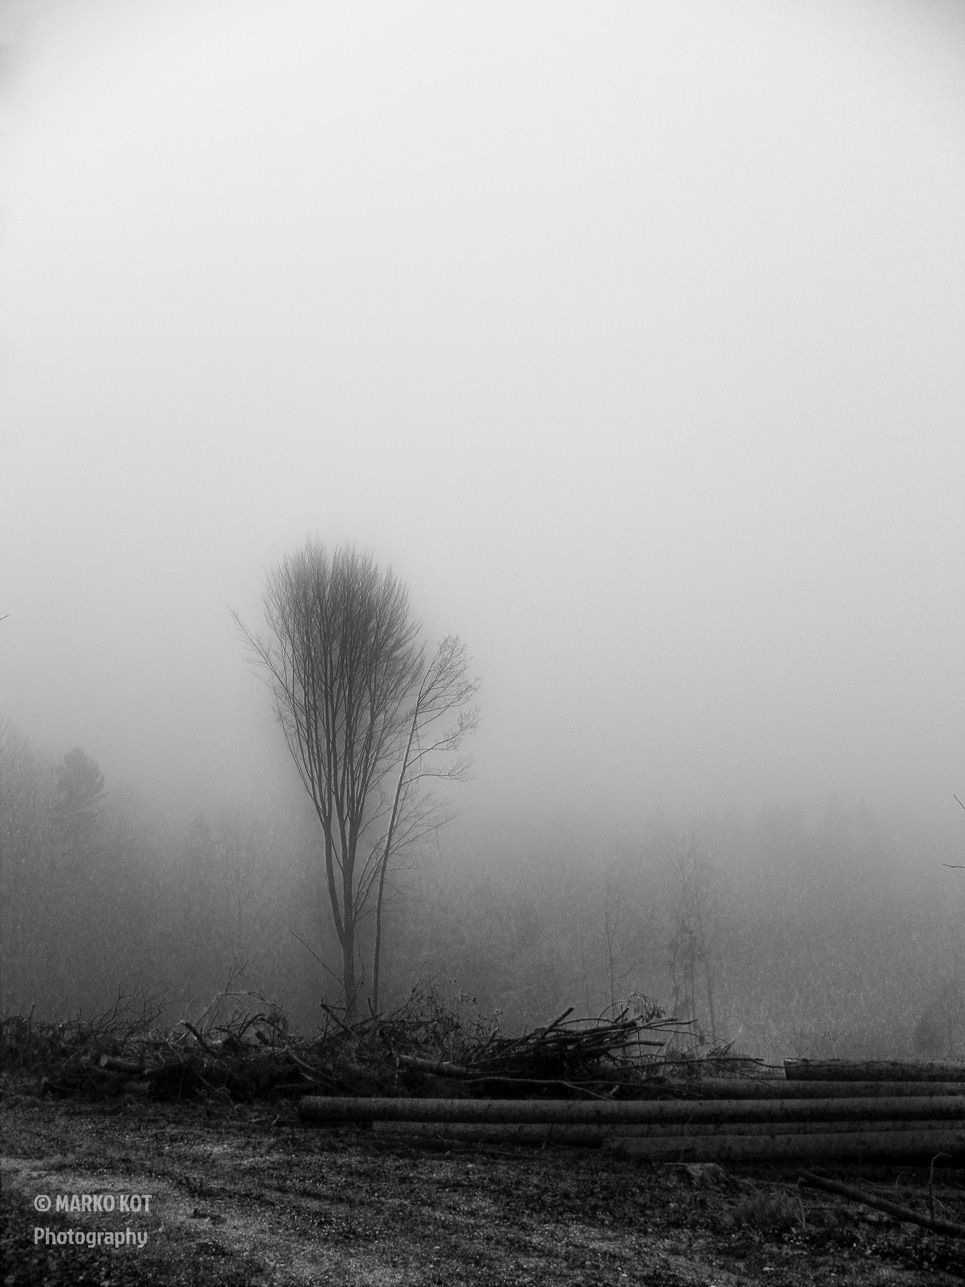 Alone In The Fog